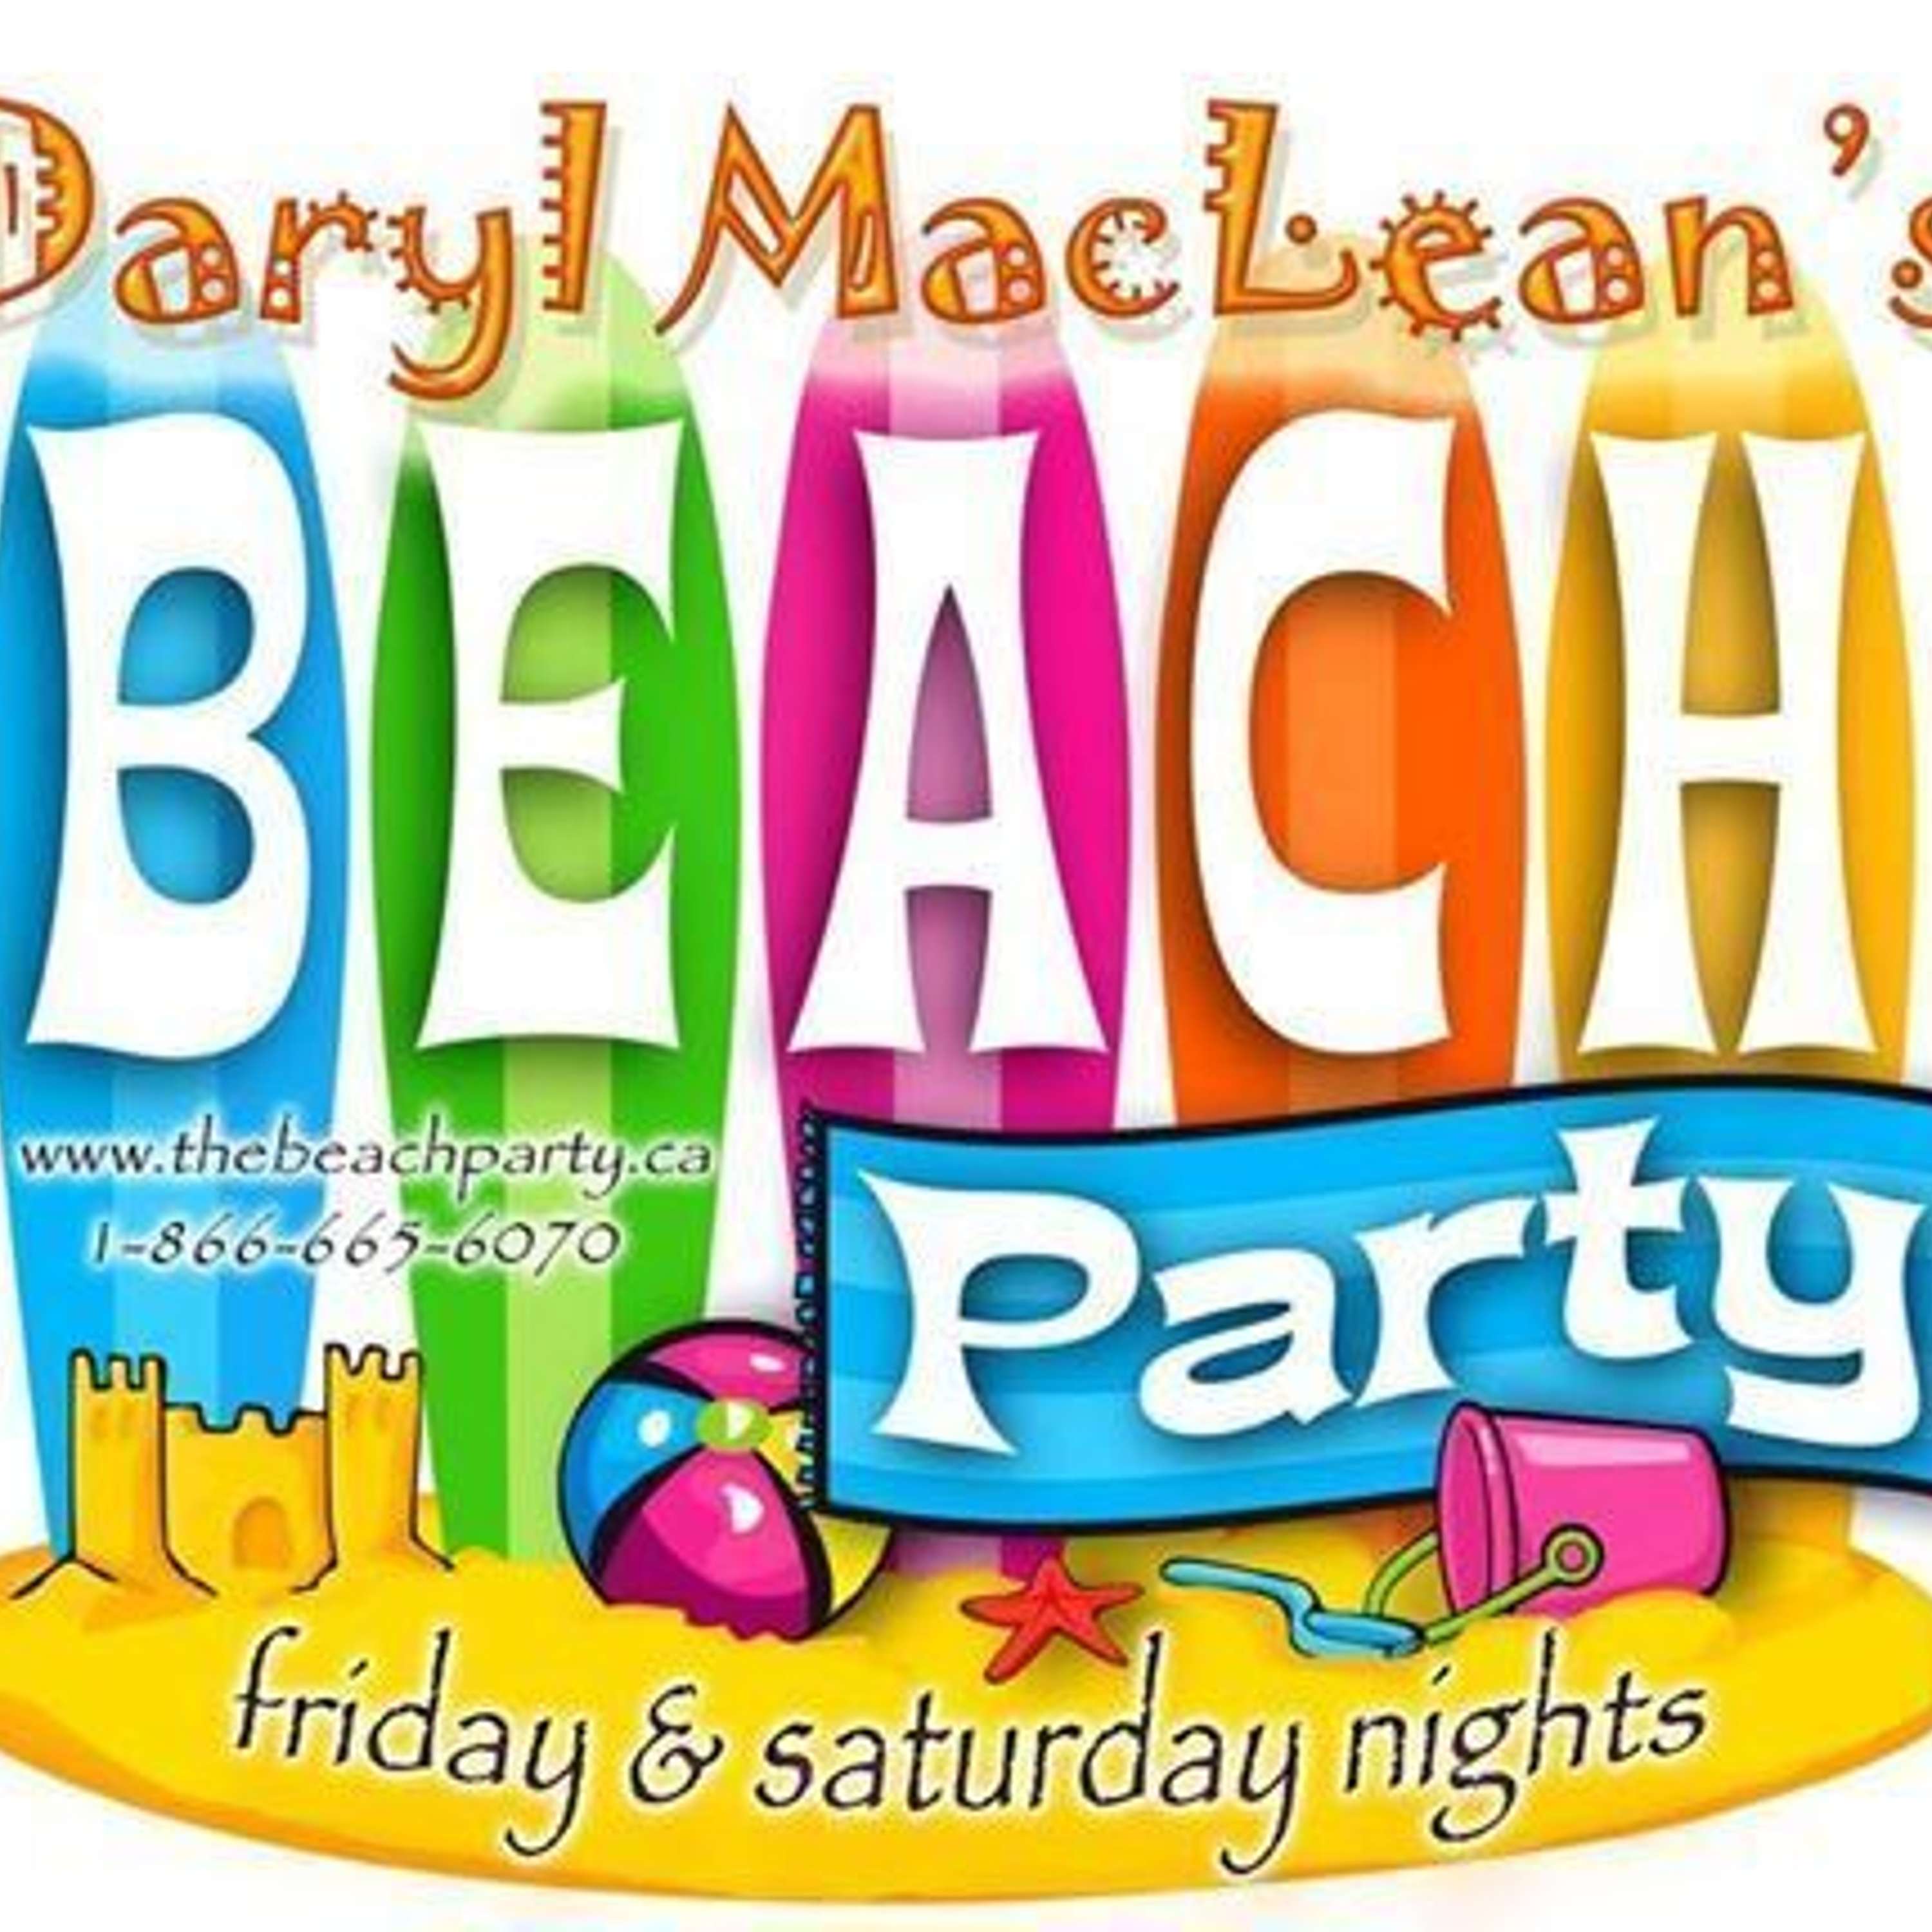 Daryl MacLean's BEACH PARTY